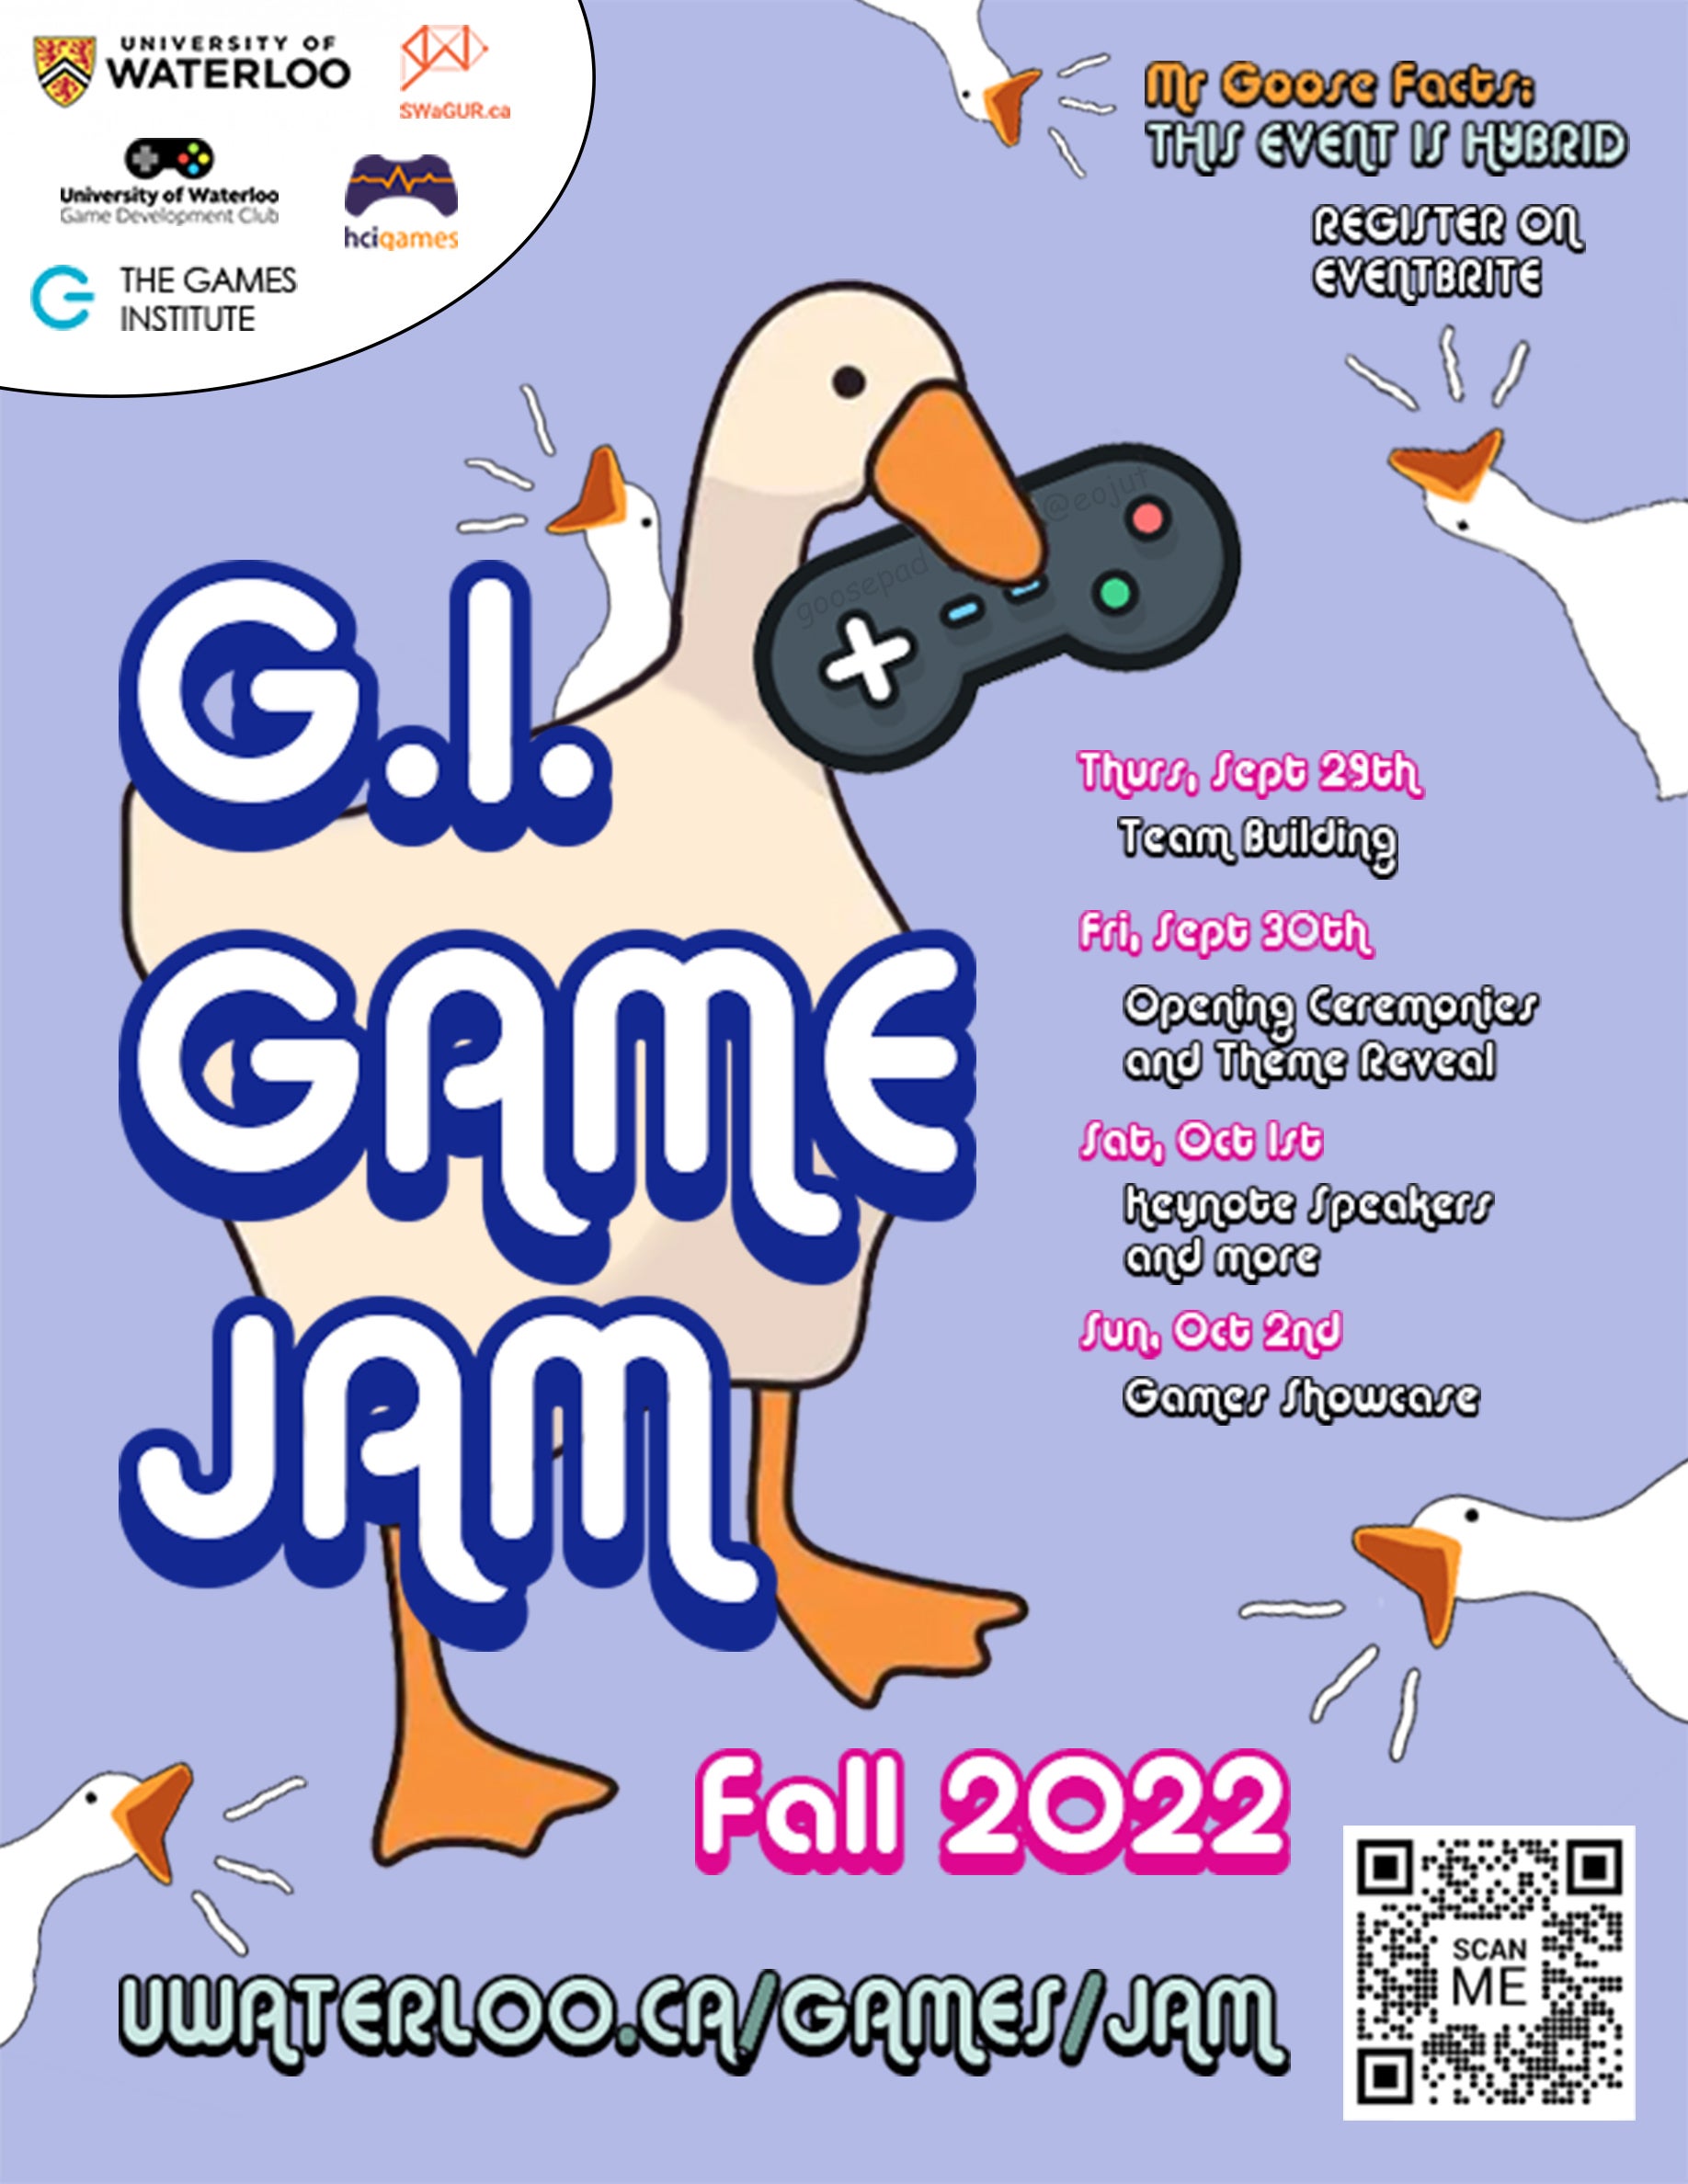 A goose holding a video game controler 